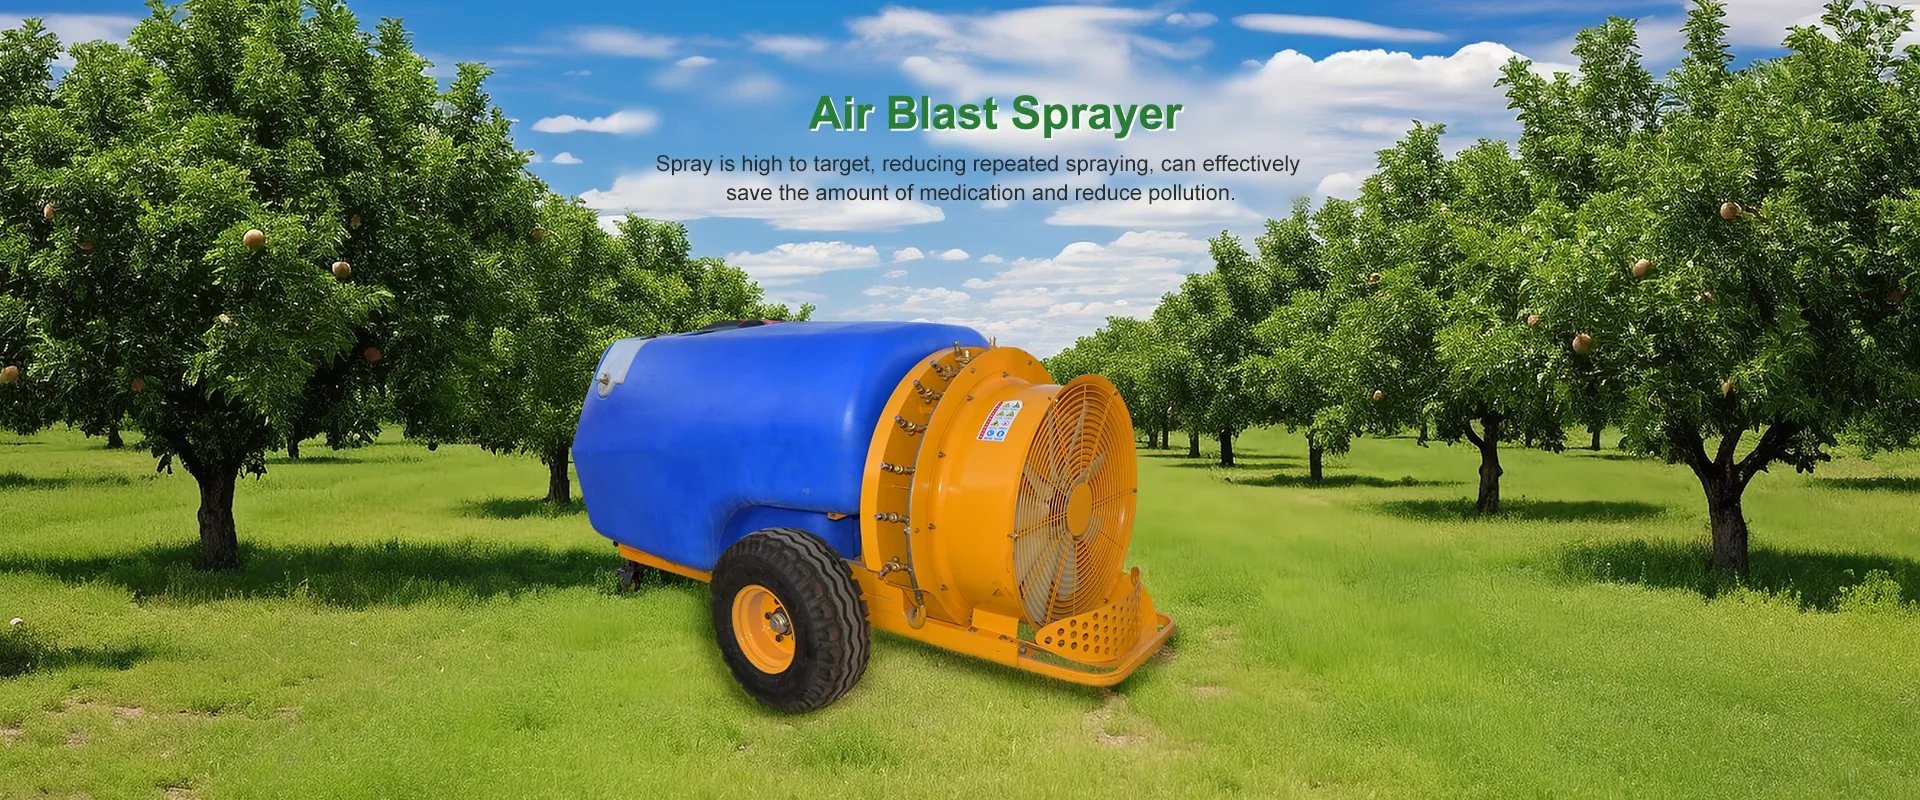 Air Blast Sprayer Factory